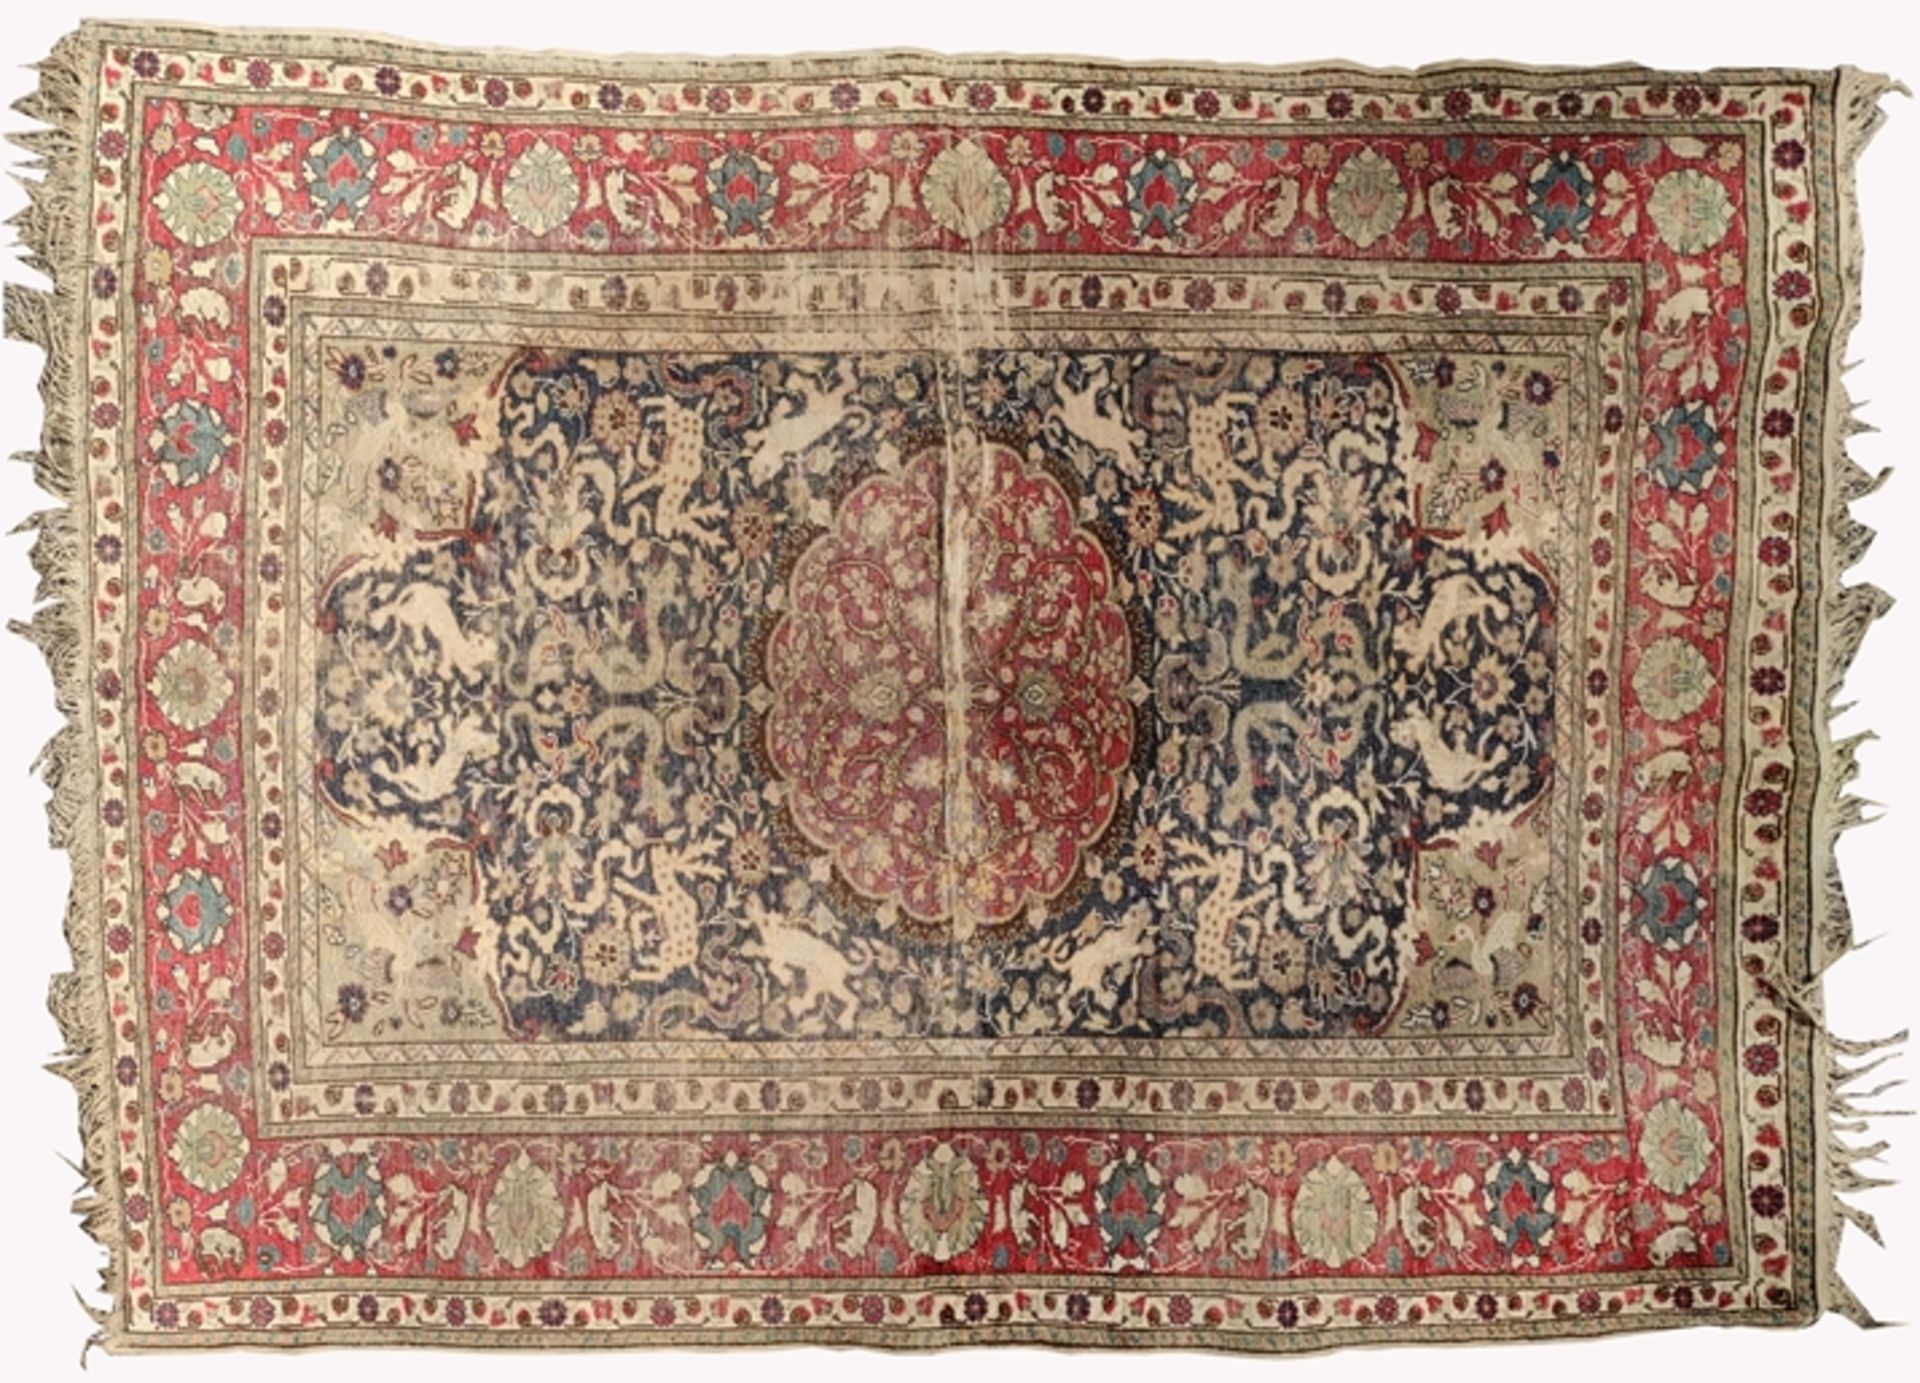 Carpet, animal motifs, Turkey, Kayserie, dimensions 178x135cm